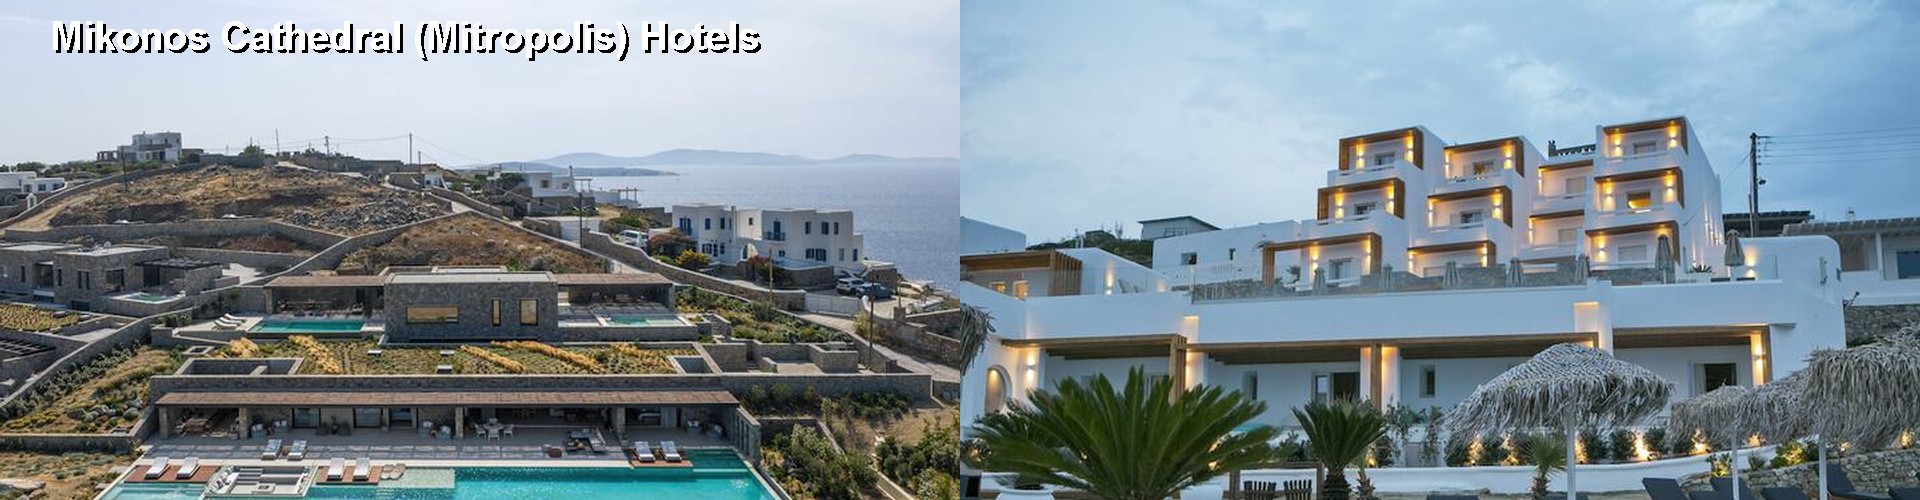 5 Best Hotels near Mikonos Cathedral (Mitropolis)